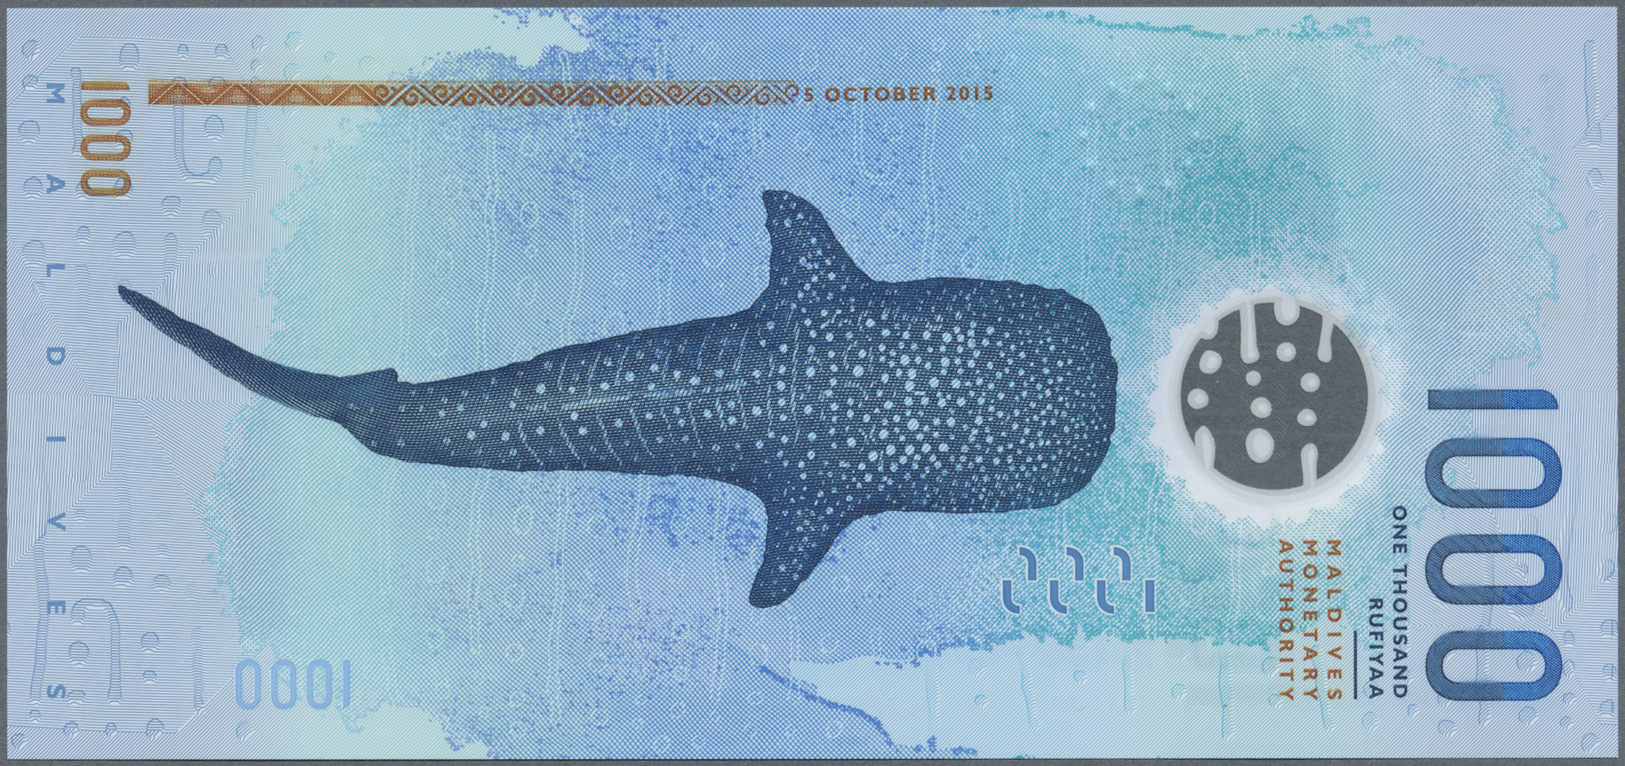 01650 Maldives / Malediven: Beautiful Polymer Note 1000 Rupees 2016 P. New In Condition: UNC. - Maldives